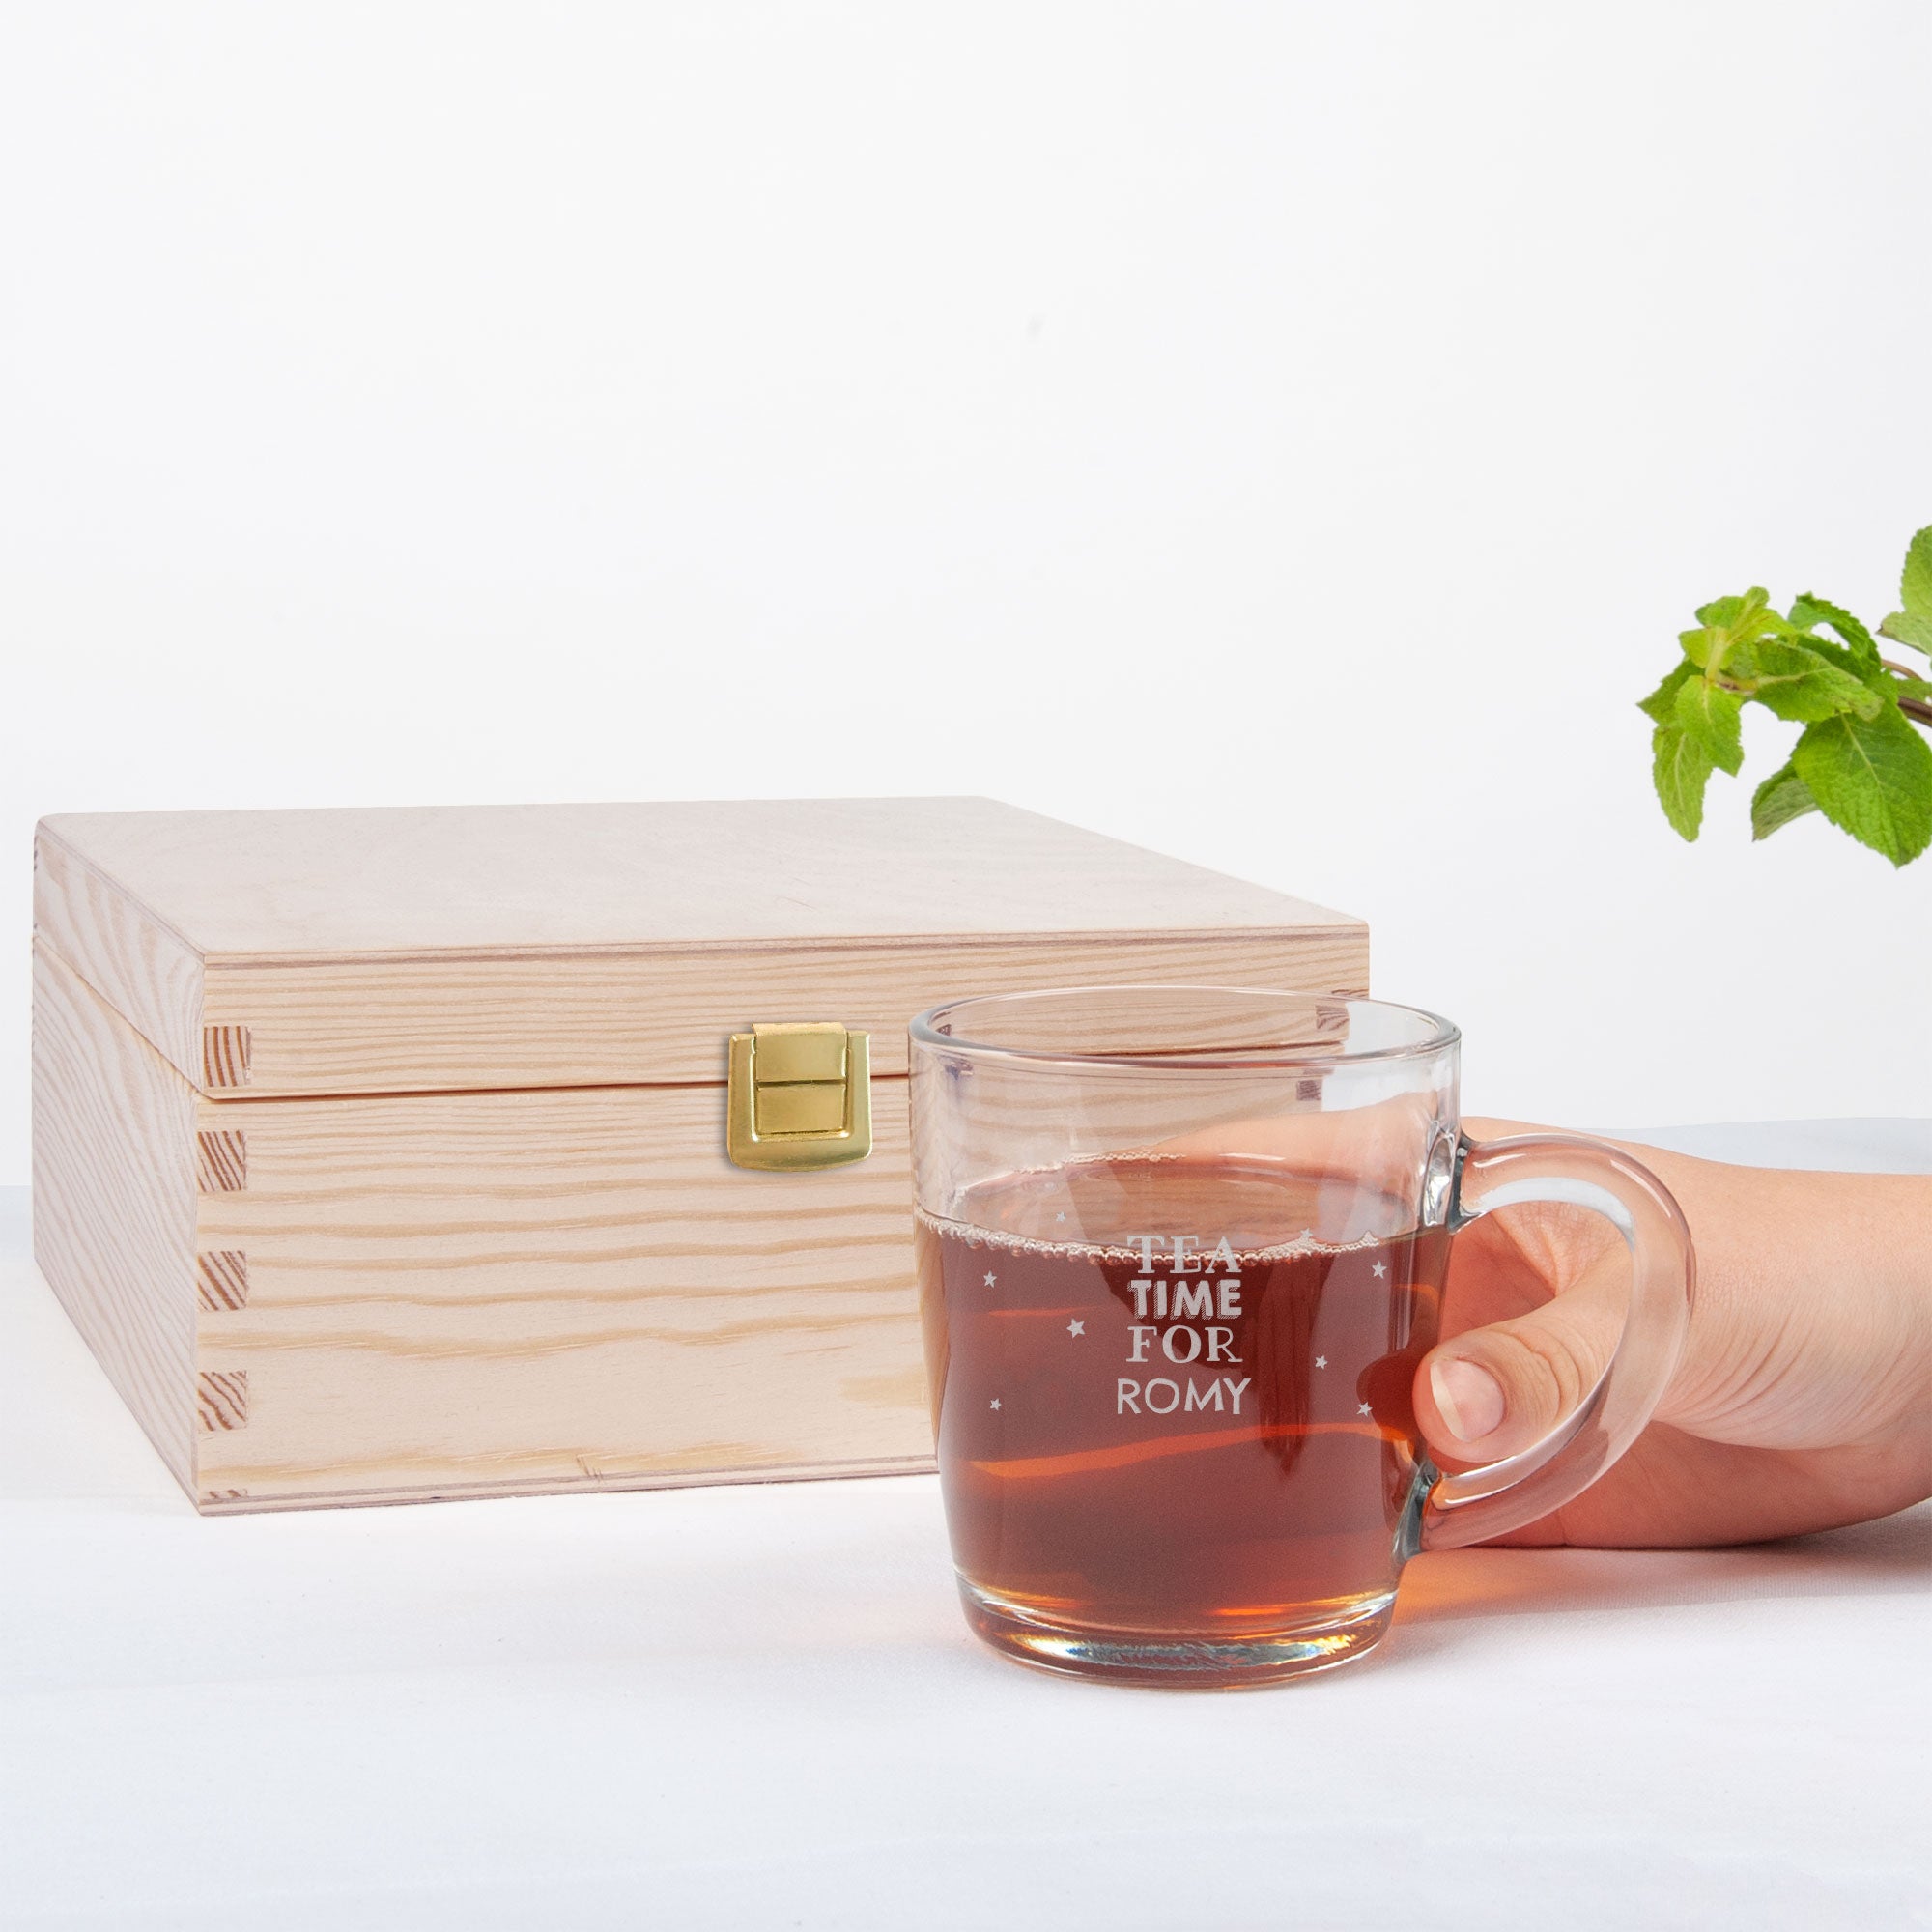 Personalised tea gift - Wooden tea box - Engraved tea glass